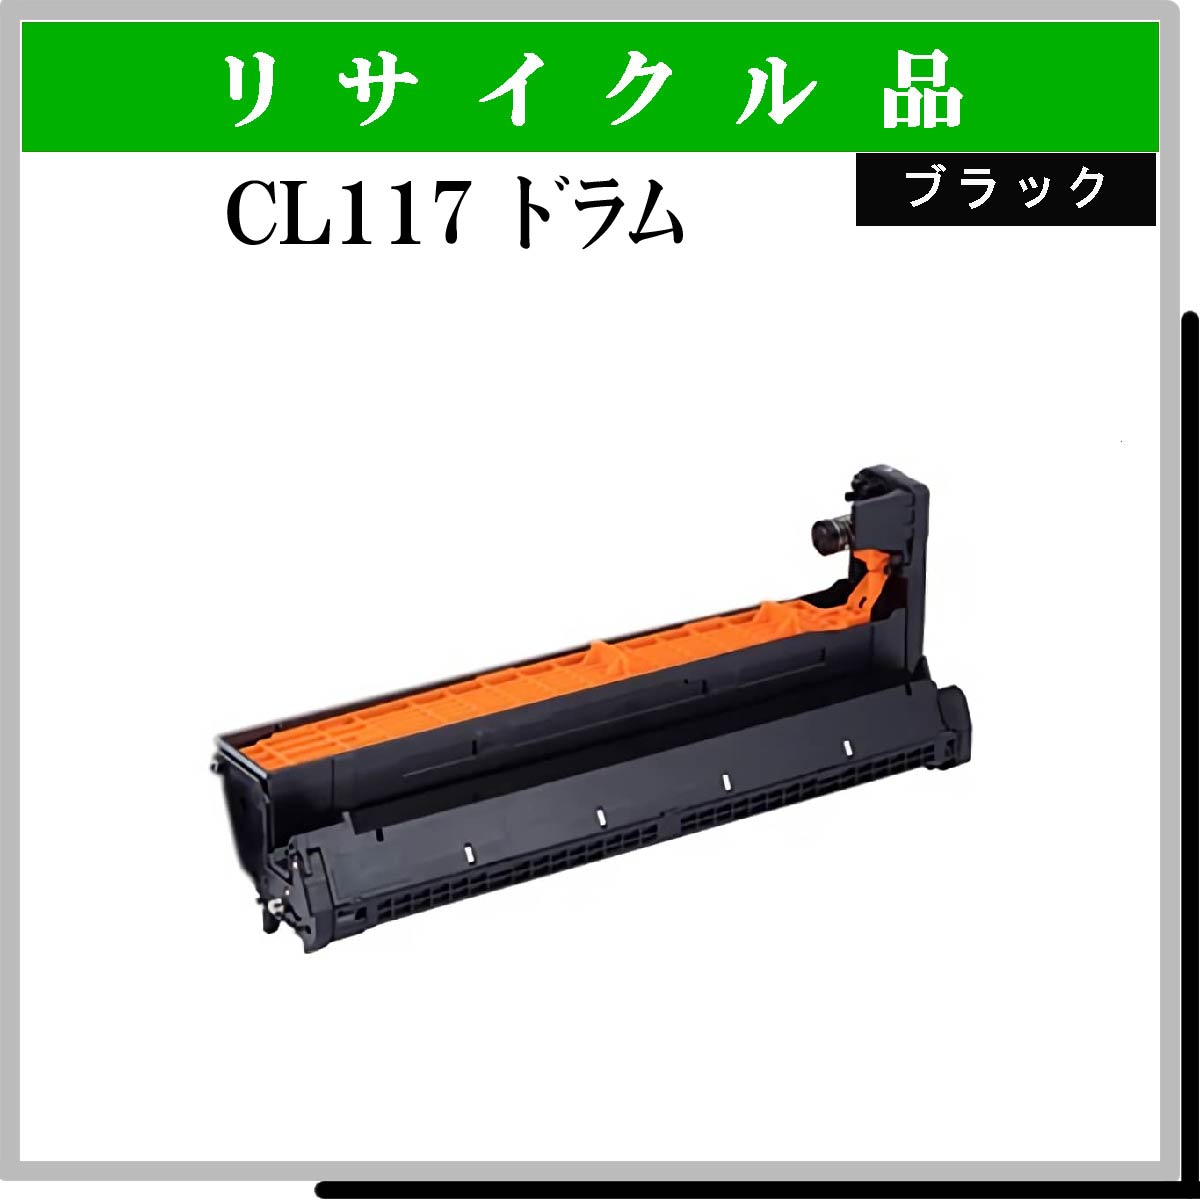 CL117 ﾄﾞﾗﾑ ﾌﾞﾗｯｸ - ウインドウを閉じる